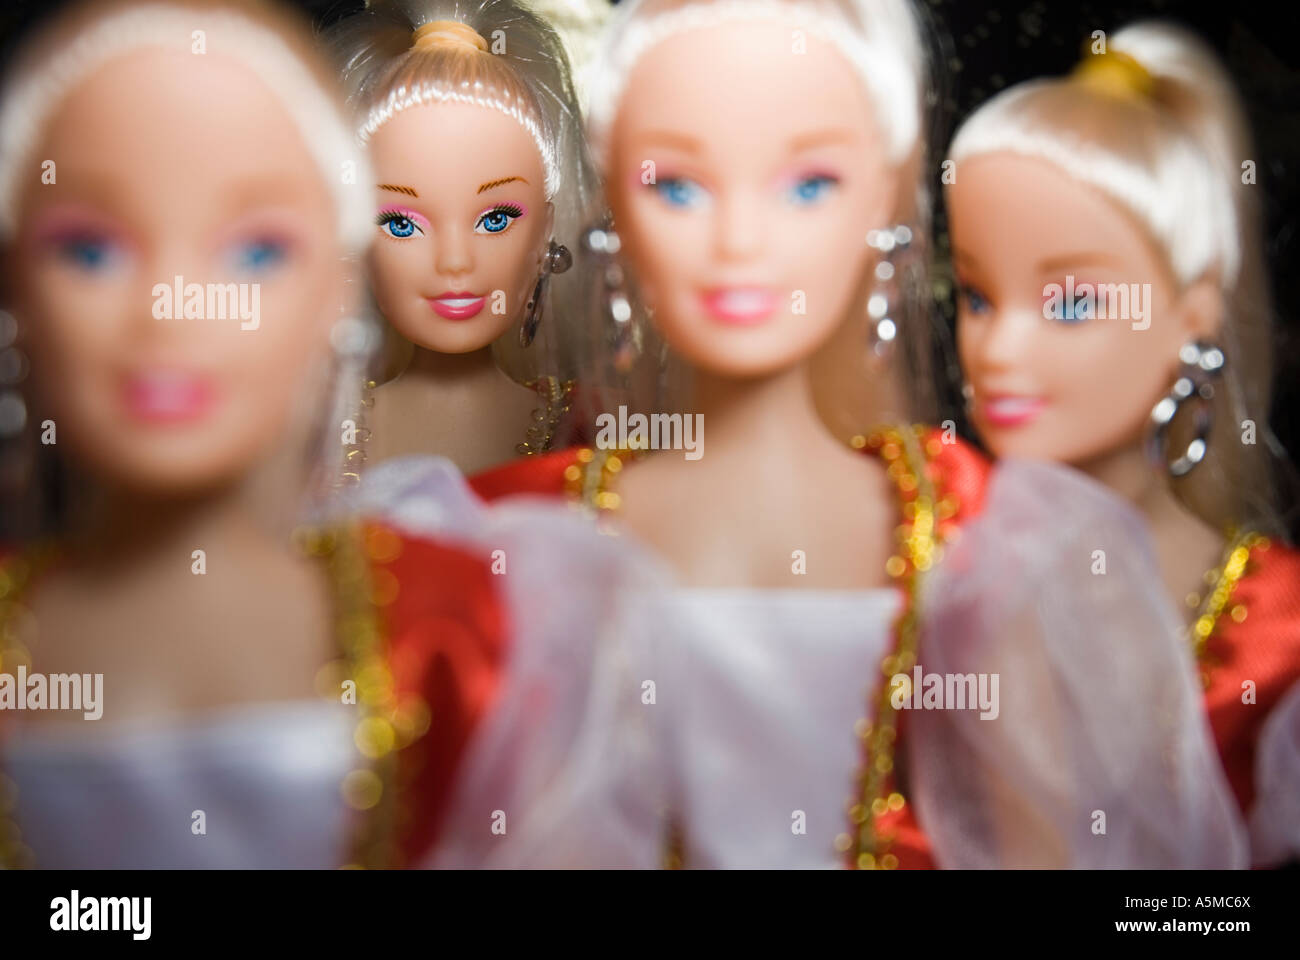 four identical dolls very narrow focus on back doll Stock Photo